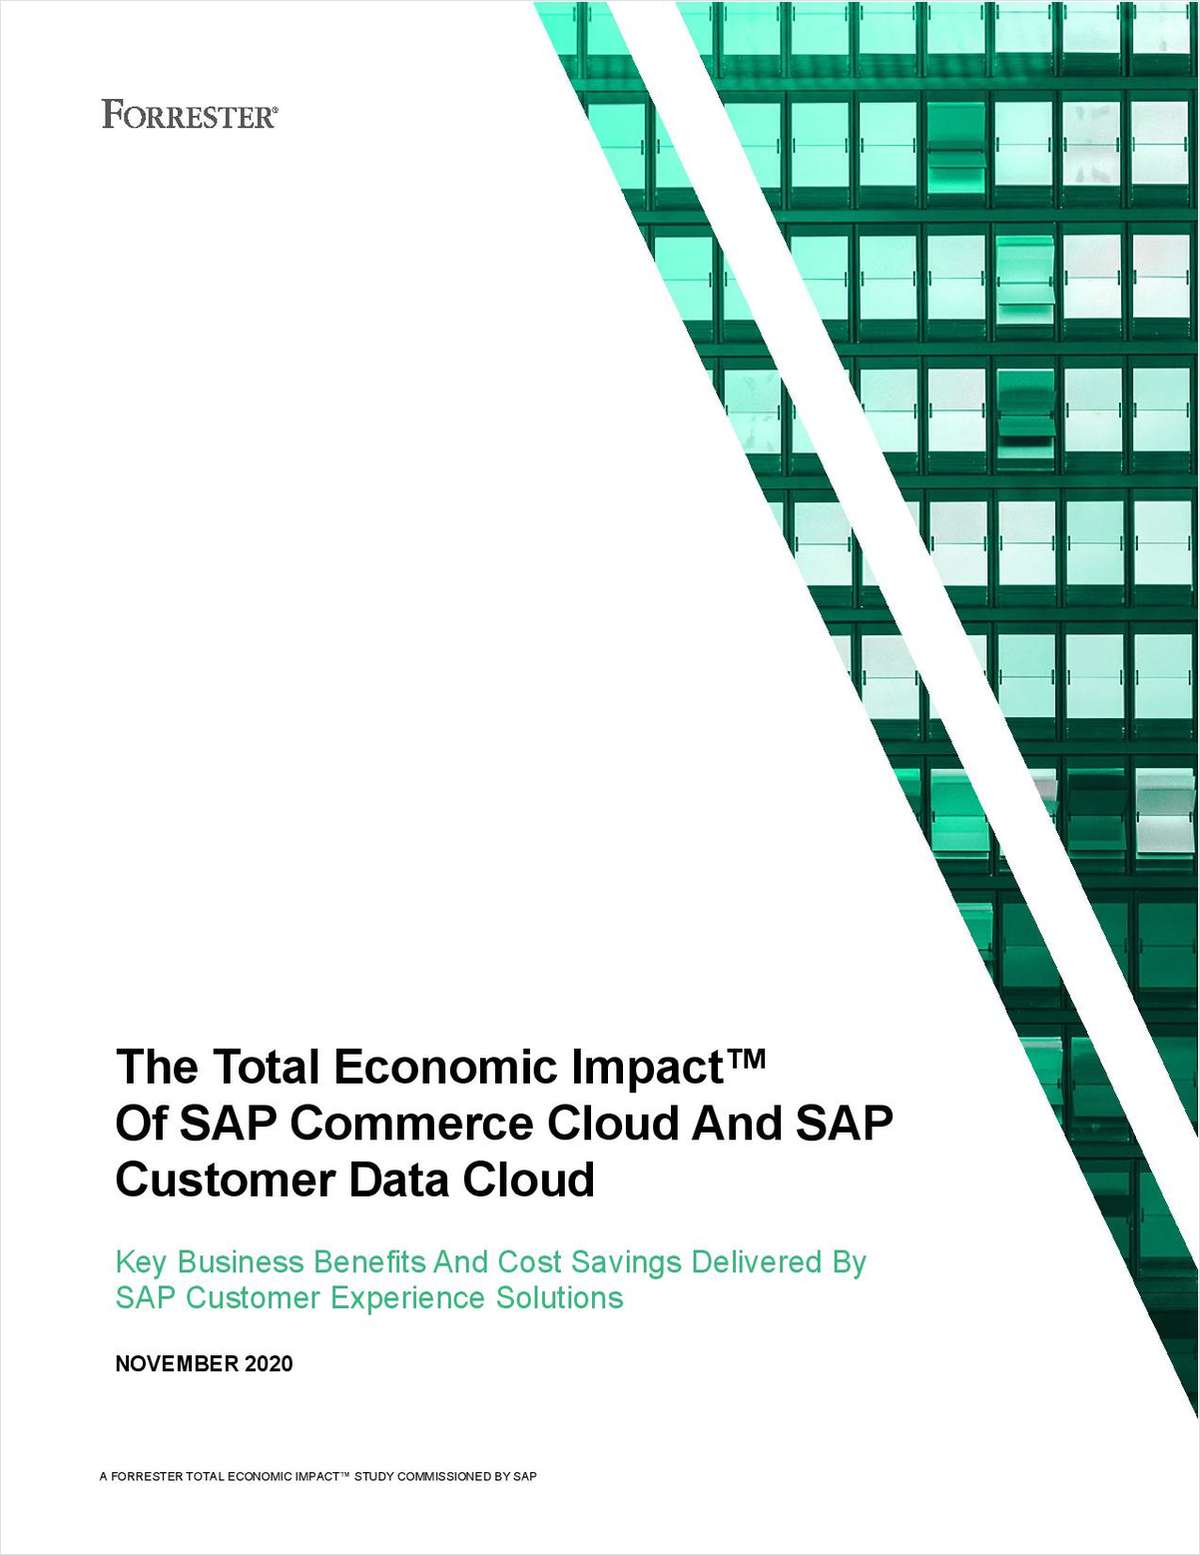 The Total Economic Impact Of SAP Commerce Cloud And SAP Customer Data Cloud